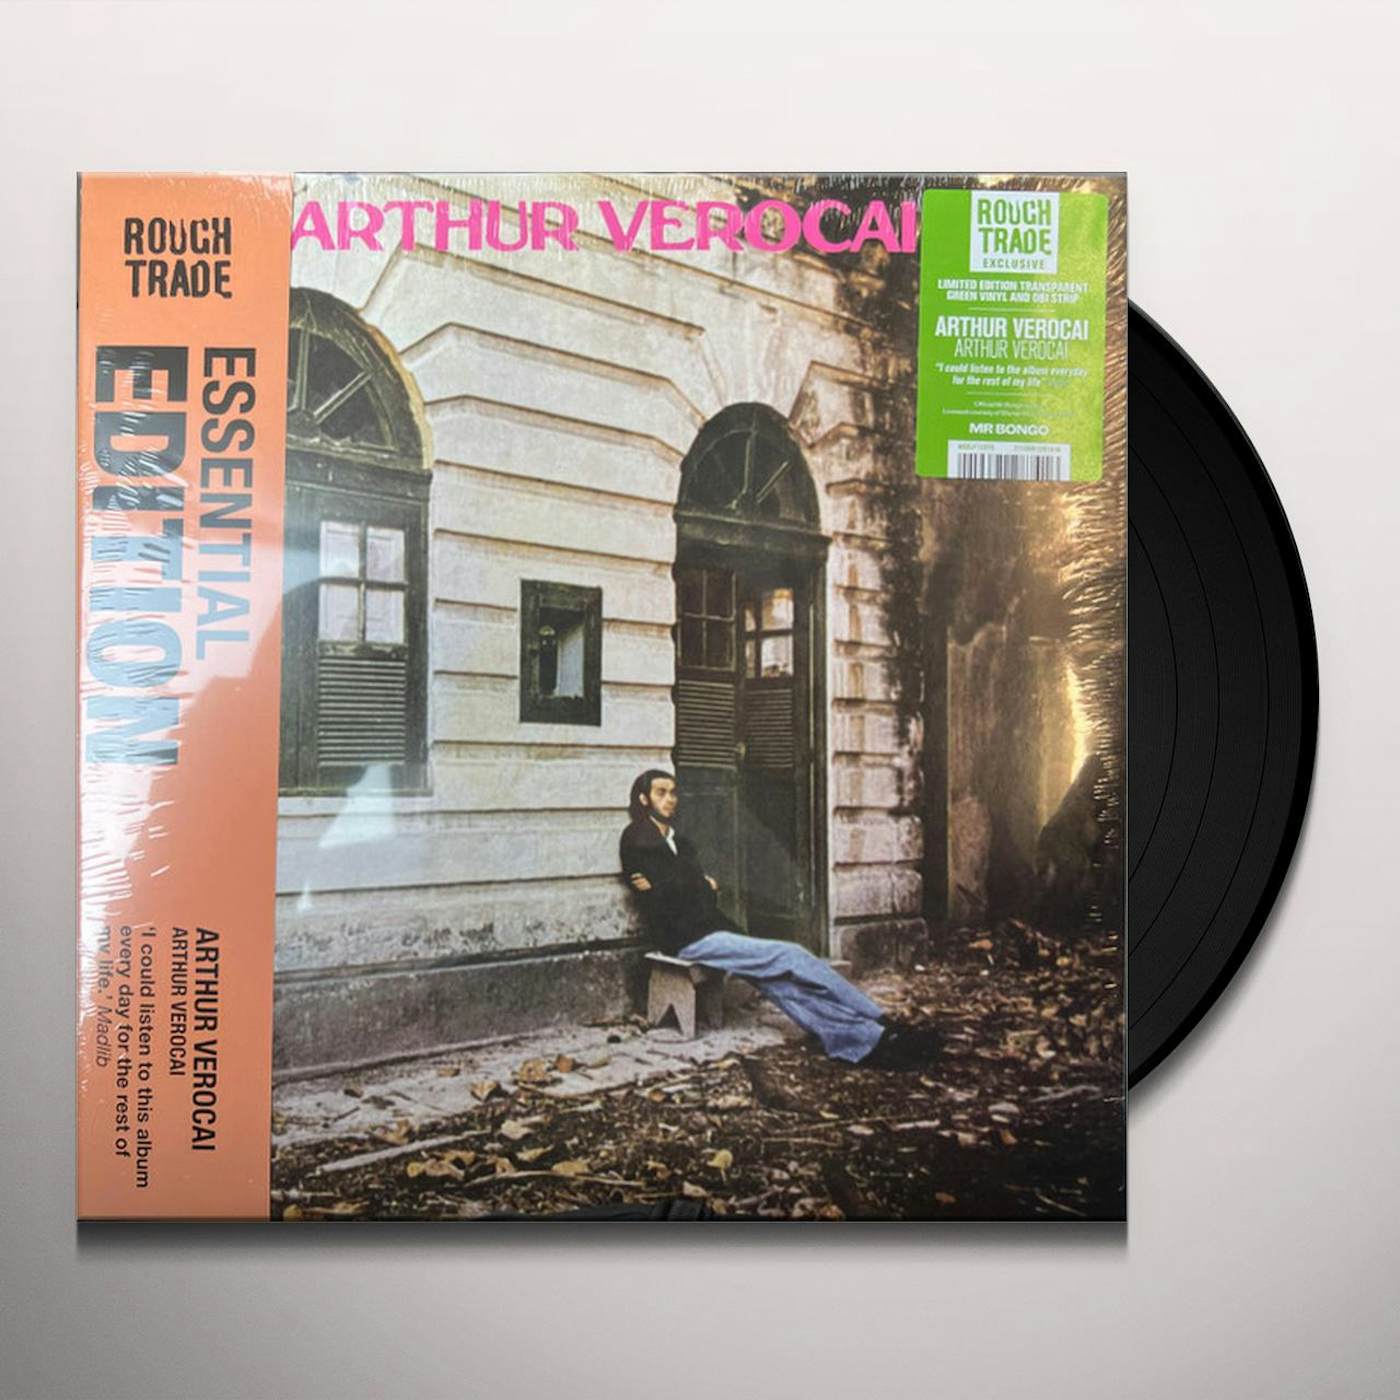  Arthur Verocai - Arthur Verocai Vinyl LP #V1B